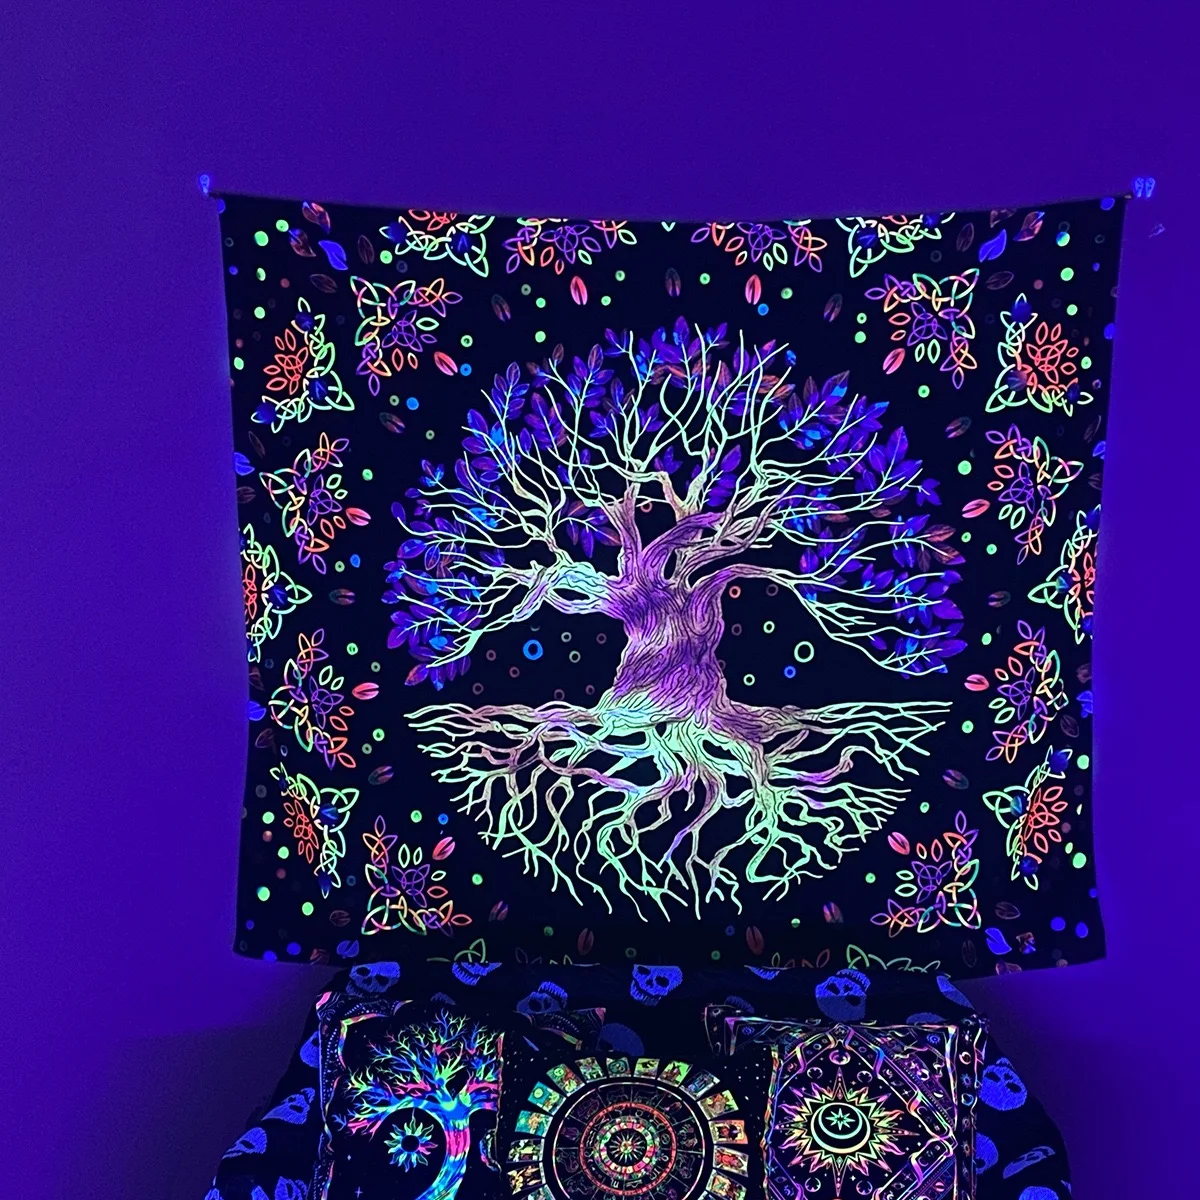 Wholesale Custom Printed Tarot Boho Hippy Wall Hanging Tree of Life Woven Blanket Moon Phase Mandala Tapestry for Home Decor